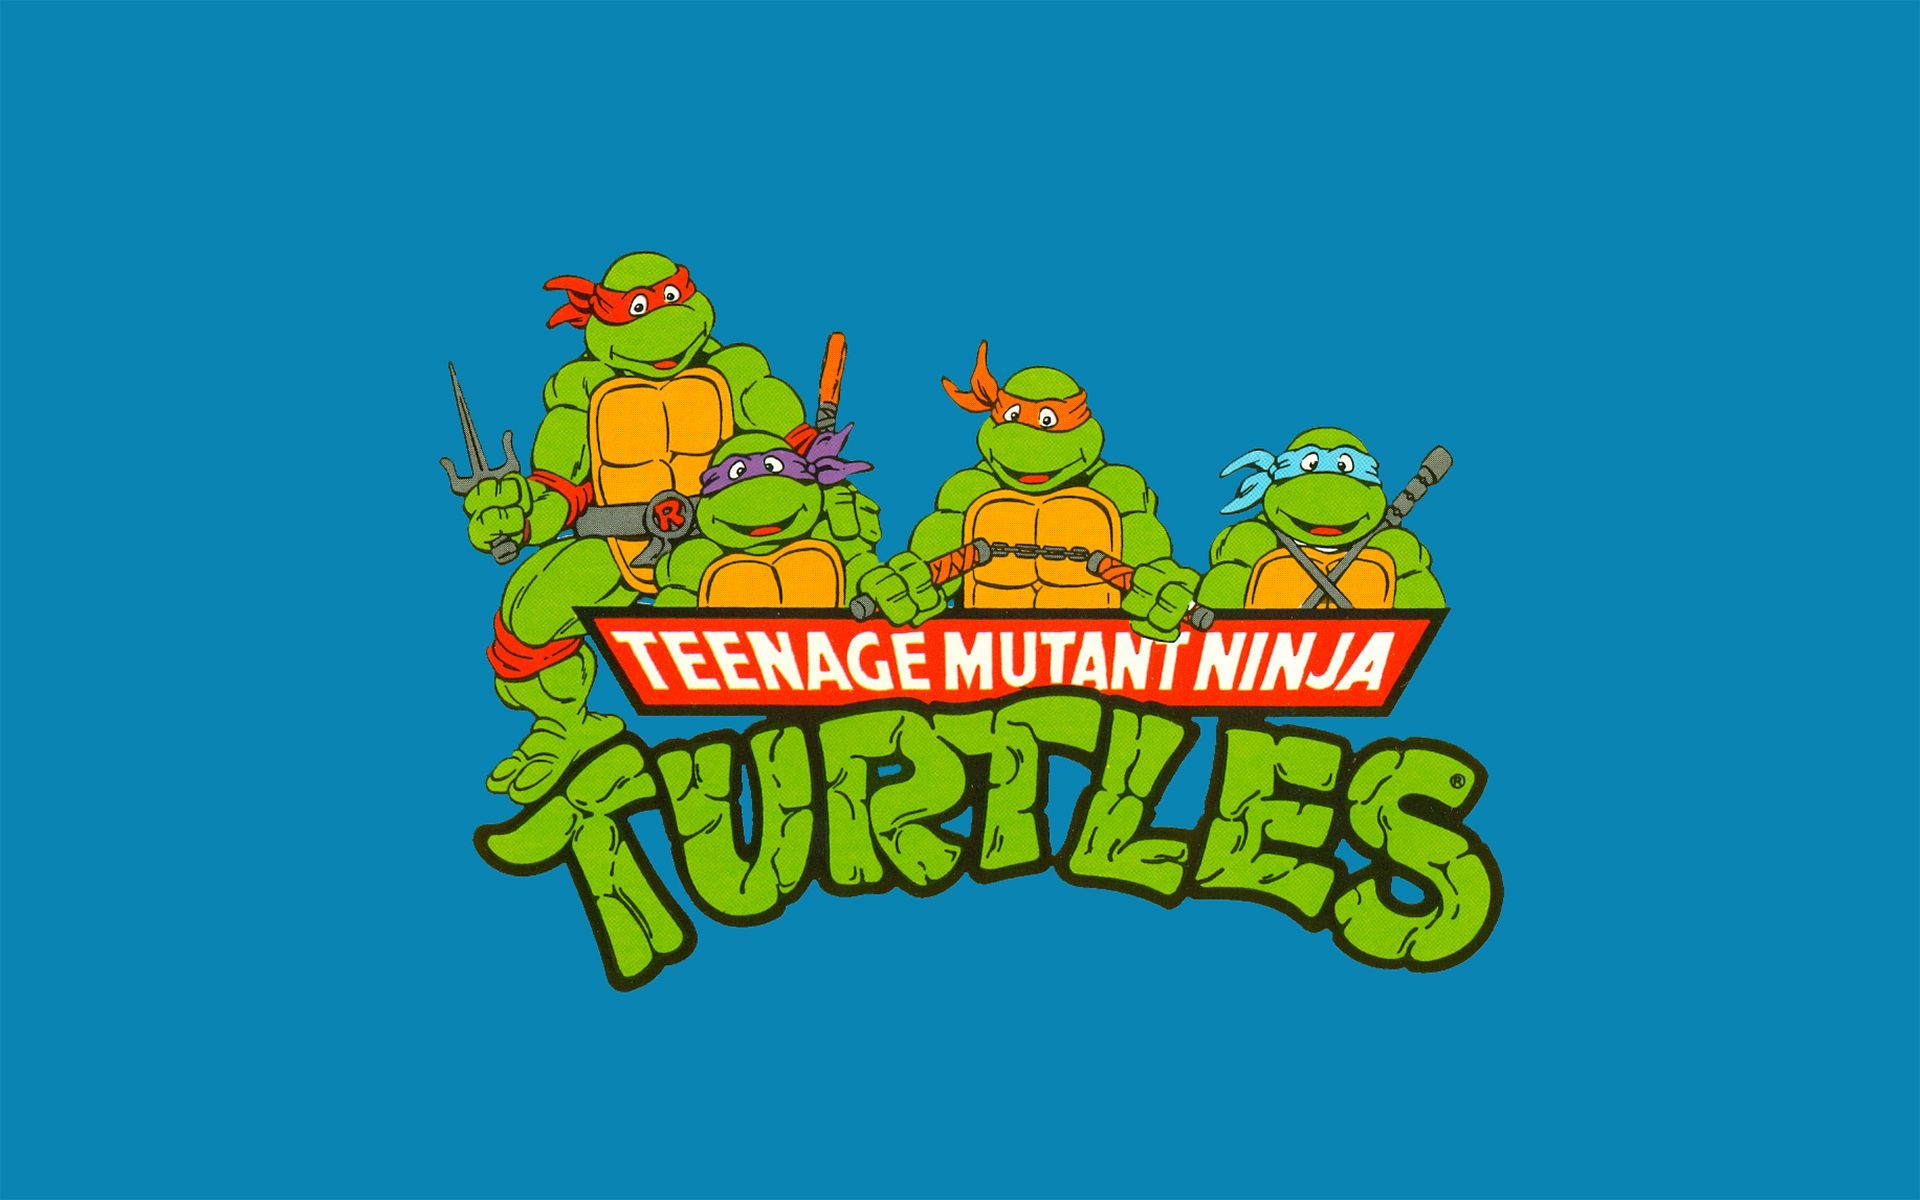 Teenage Mutant Ninja Turtles Logo wallpaper HD free. Tmnt wallpaper, Ninja turtles cartoon, Tmnt